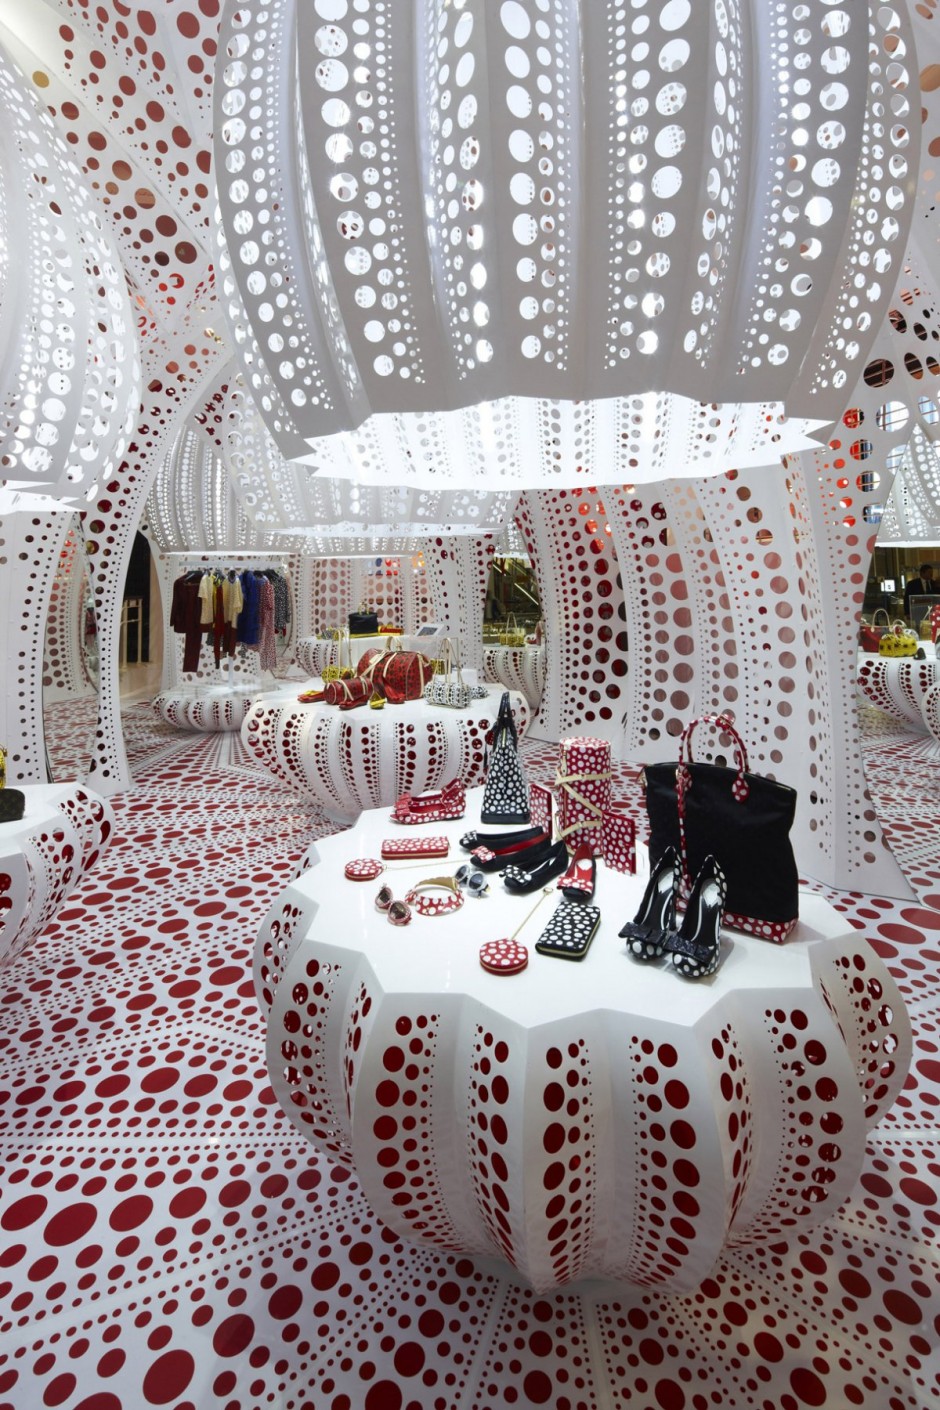 Louis Vuitton & Yayoi Kusama collaborate in window design at Selfridges,  London, UK - 24 August 2012